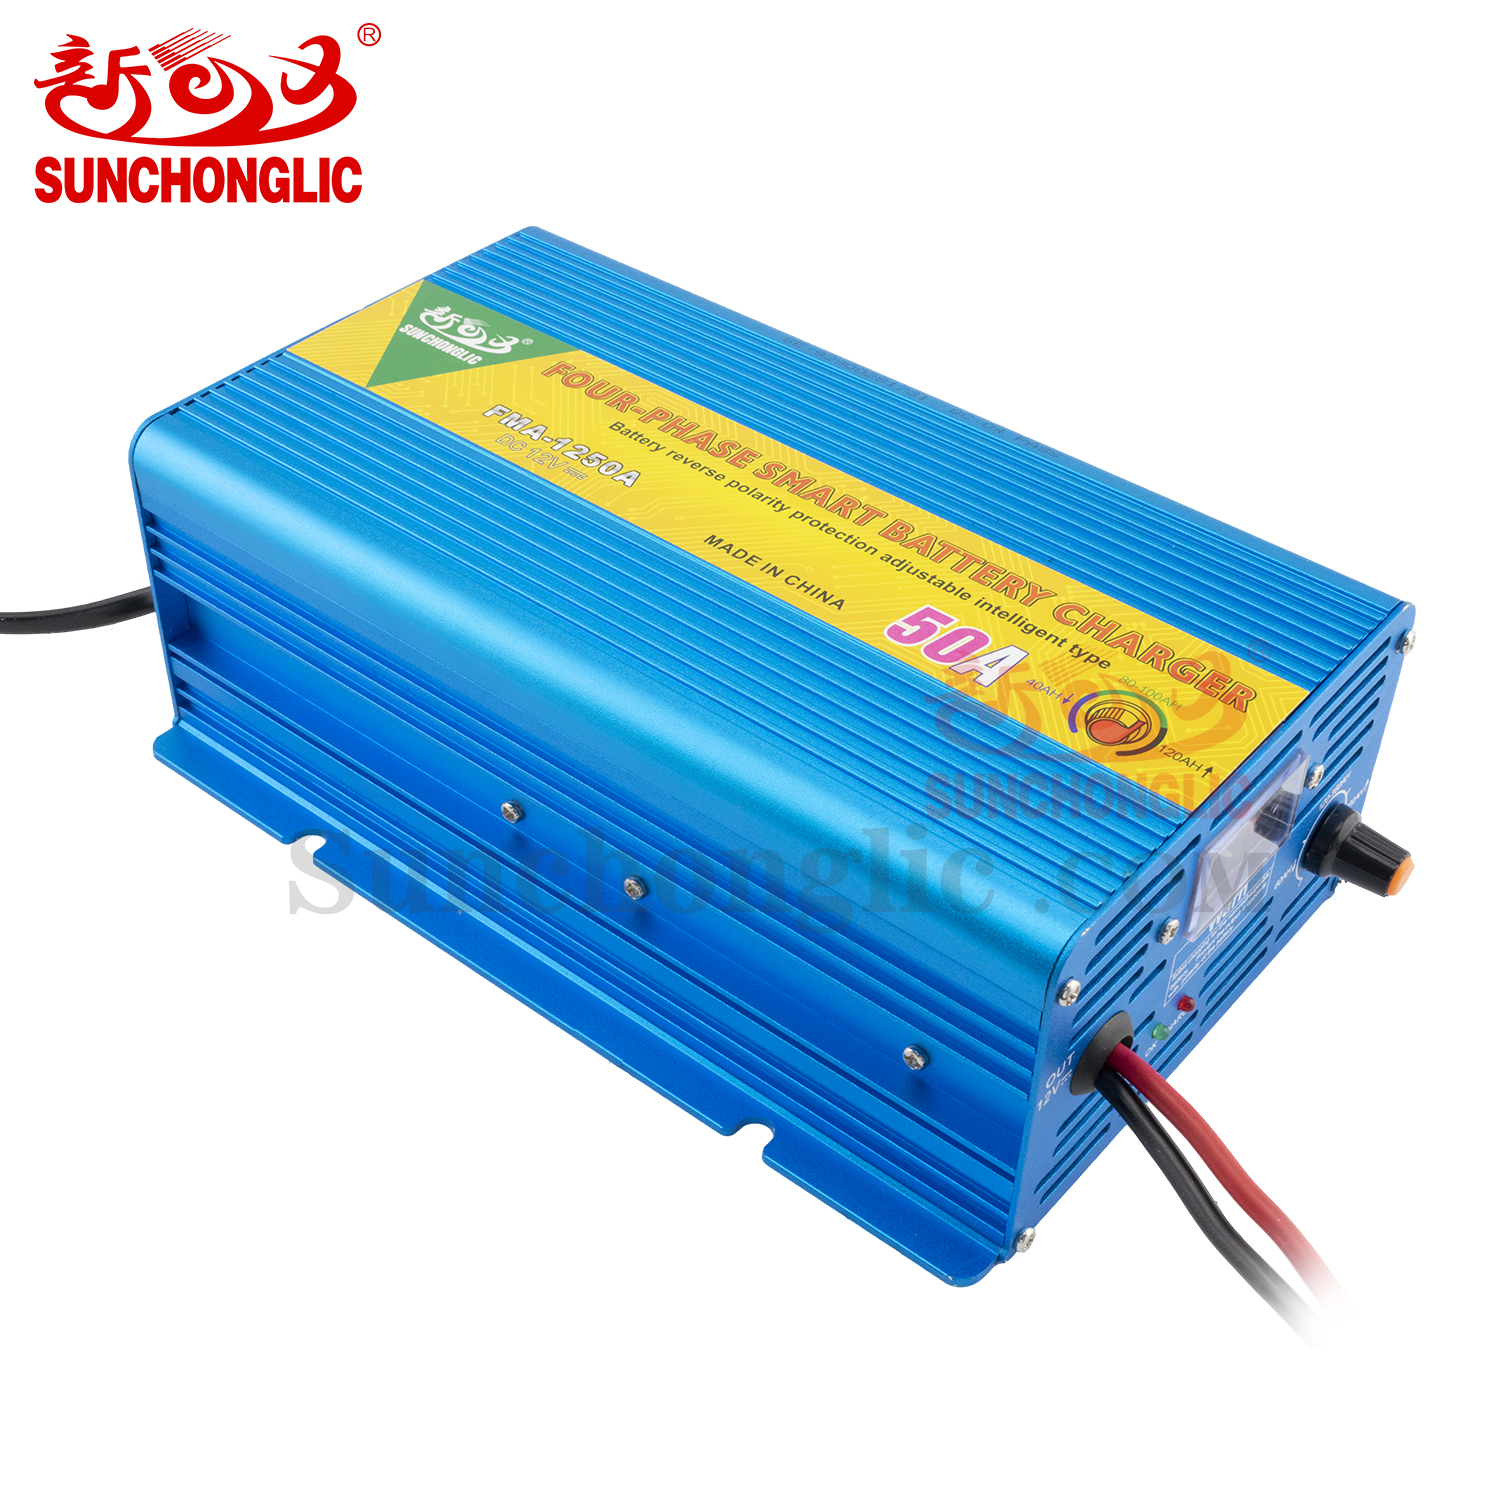 FMA-1250A - AGM/GEL Battery Charger - Foshan Sunchonglic Electric Appliance  Co., Ltd.